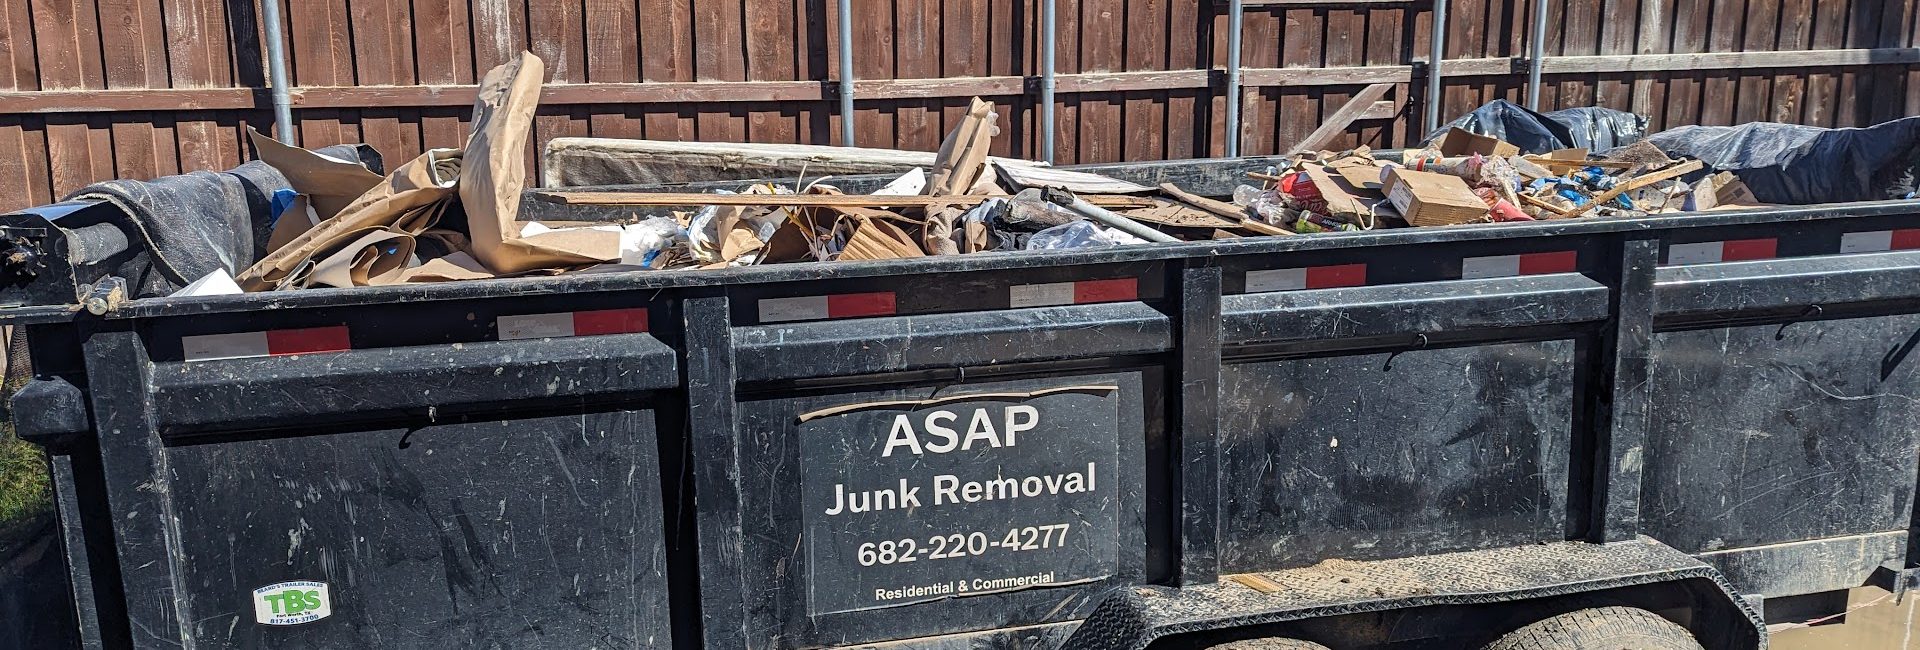 Asap Junk Removal, LLC 2